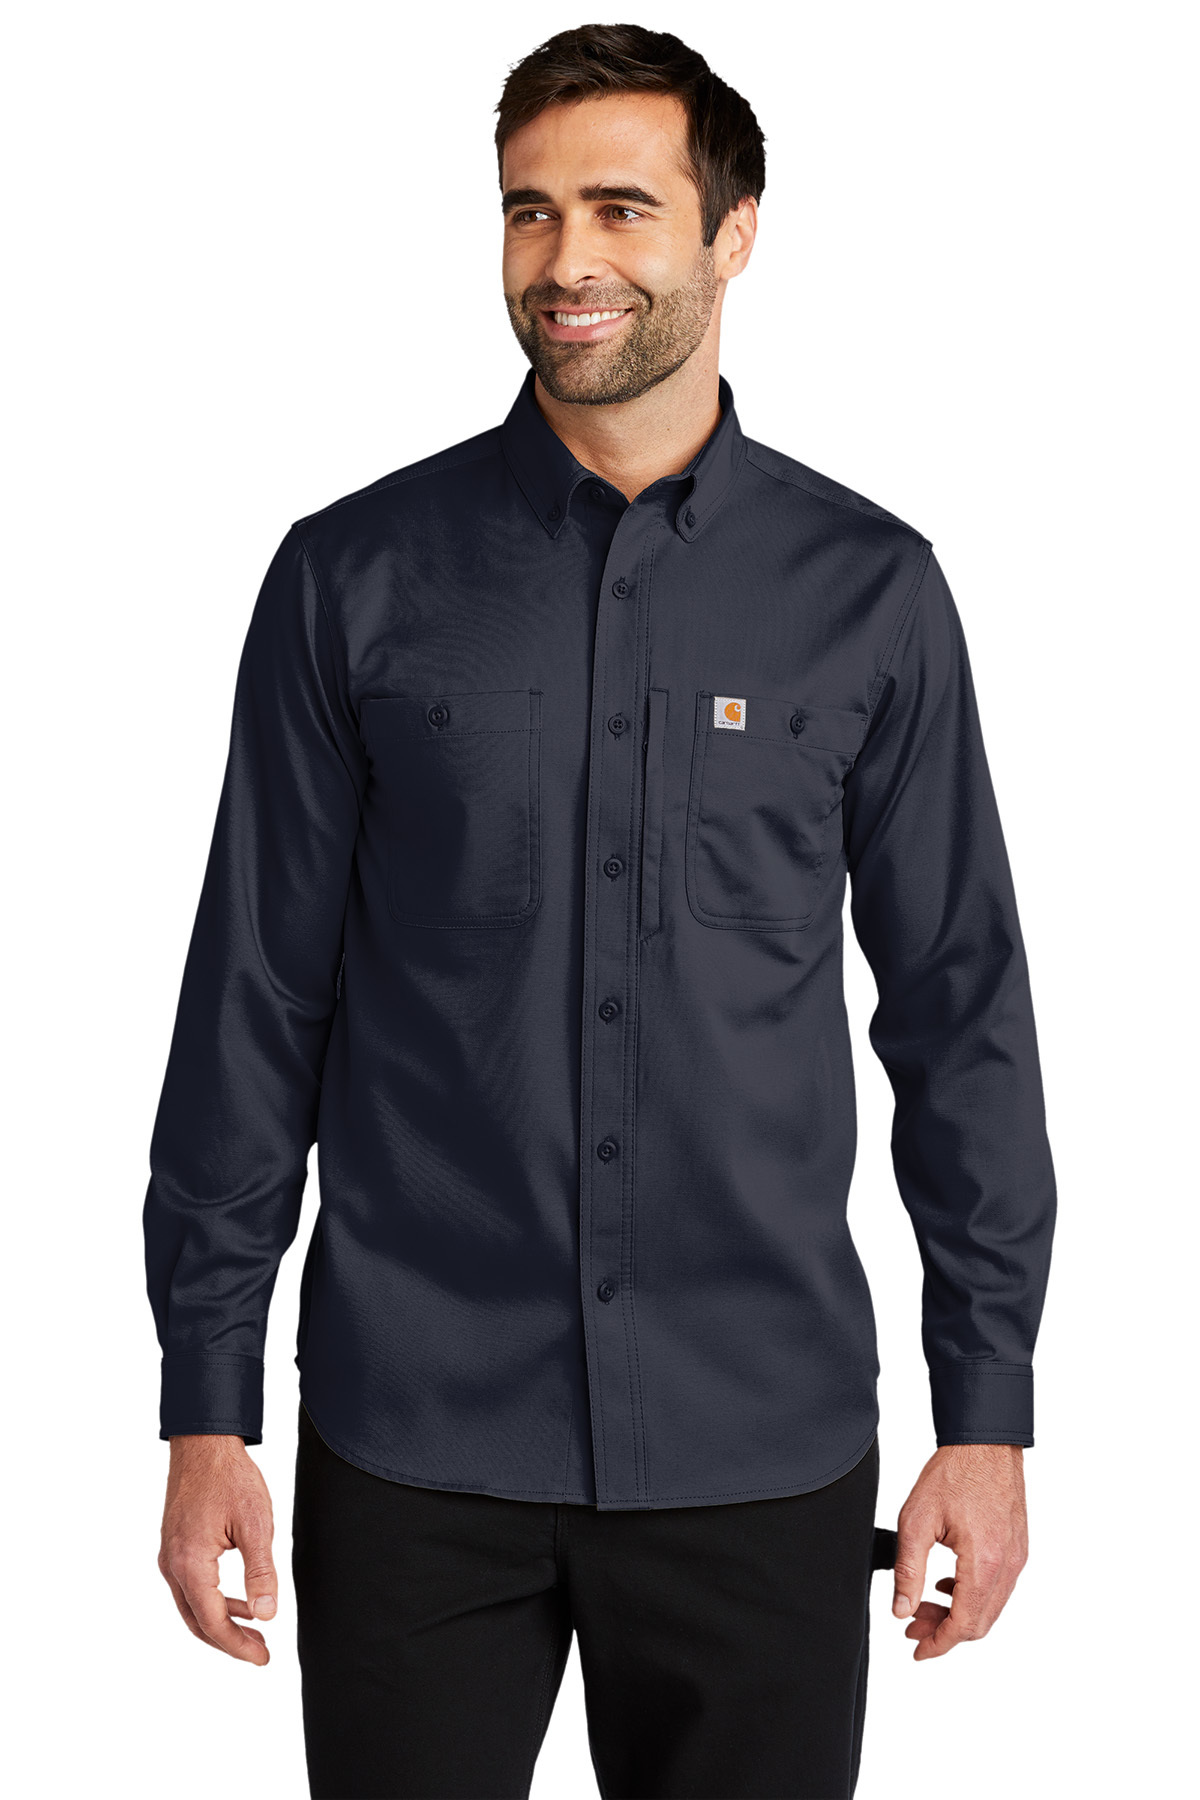 Product Professional | Sleeve Rugged Carhartt Shirt SanMar Long Series |